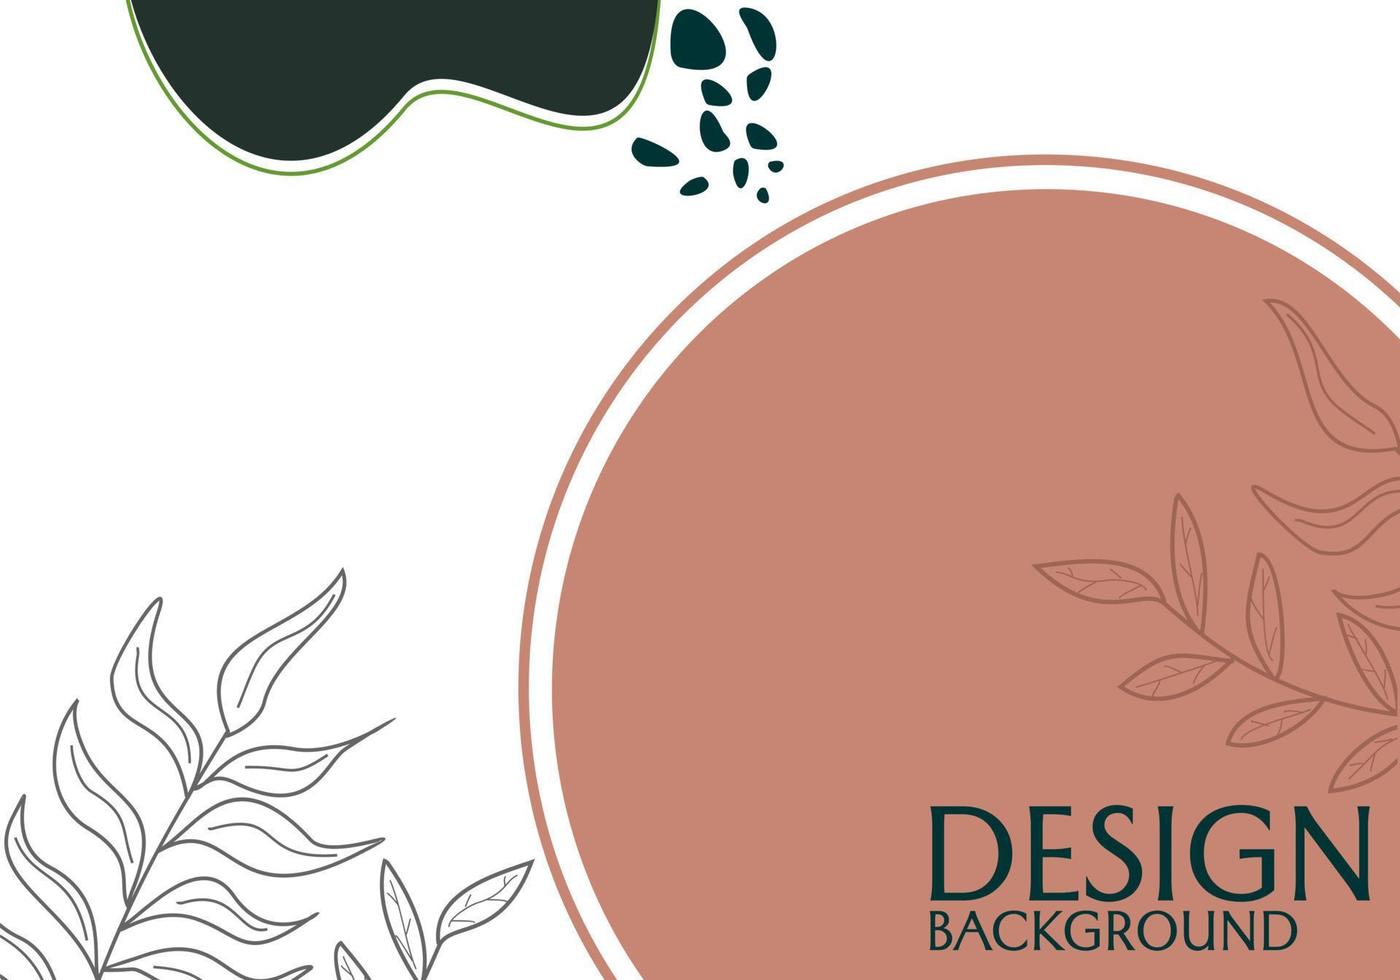 abstrakt bannerdesign med handritade bladelement. estetisk malldesign för affisch, omslag, hemsida vektor